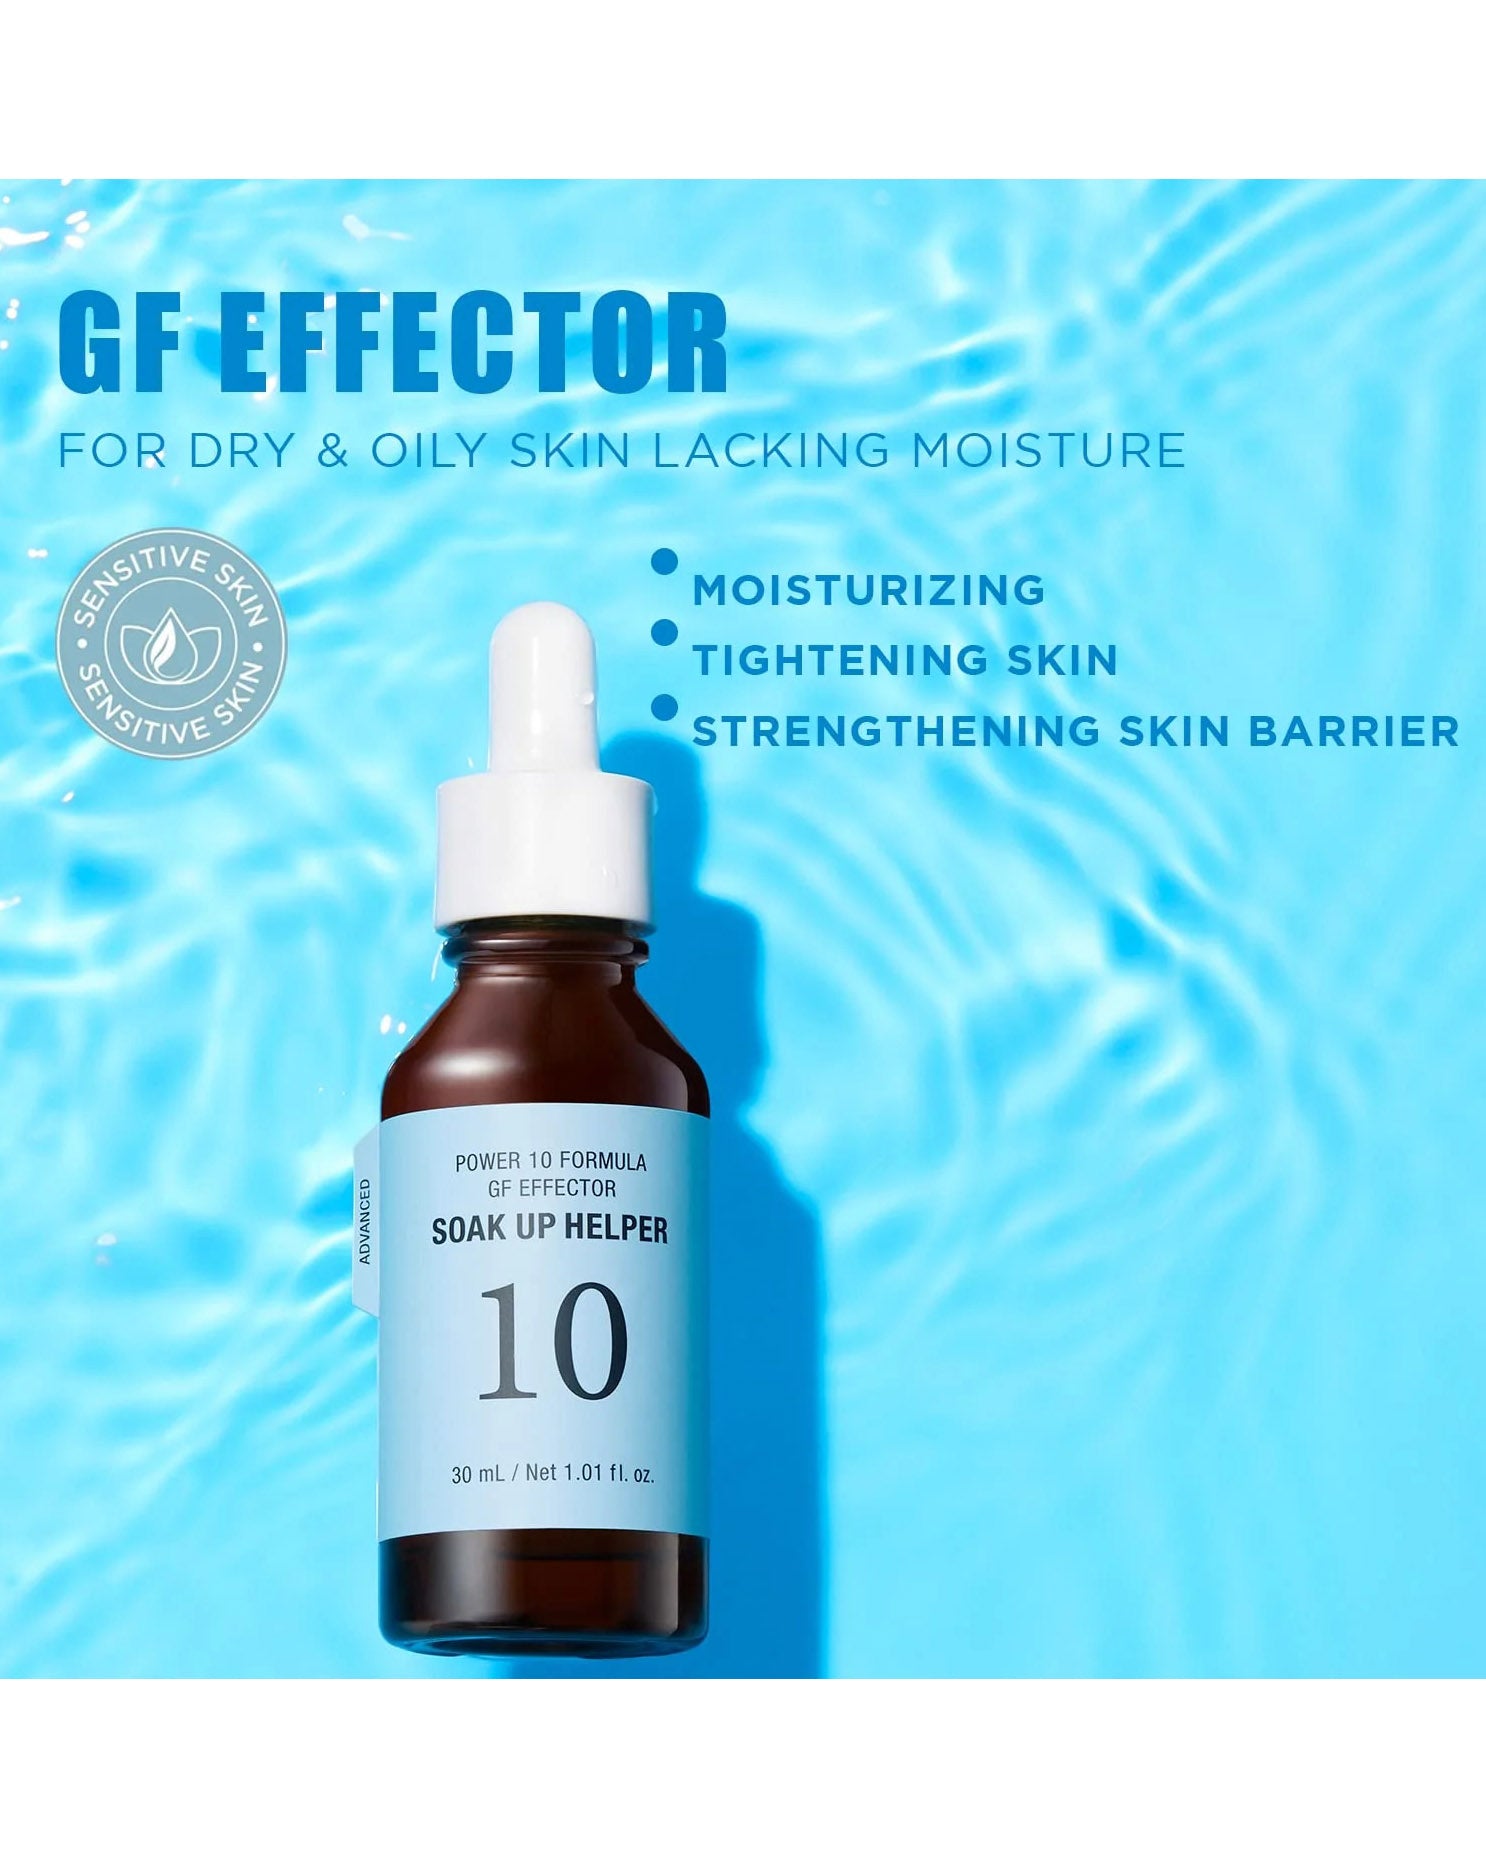 It's Skin Power 10 Formula GF Effector AD Soak Up Helper